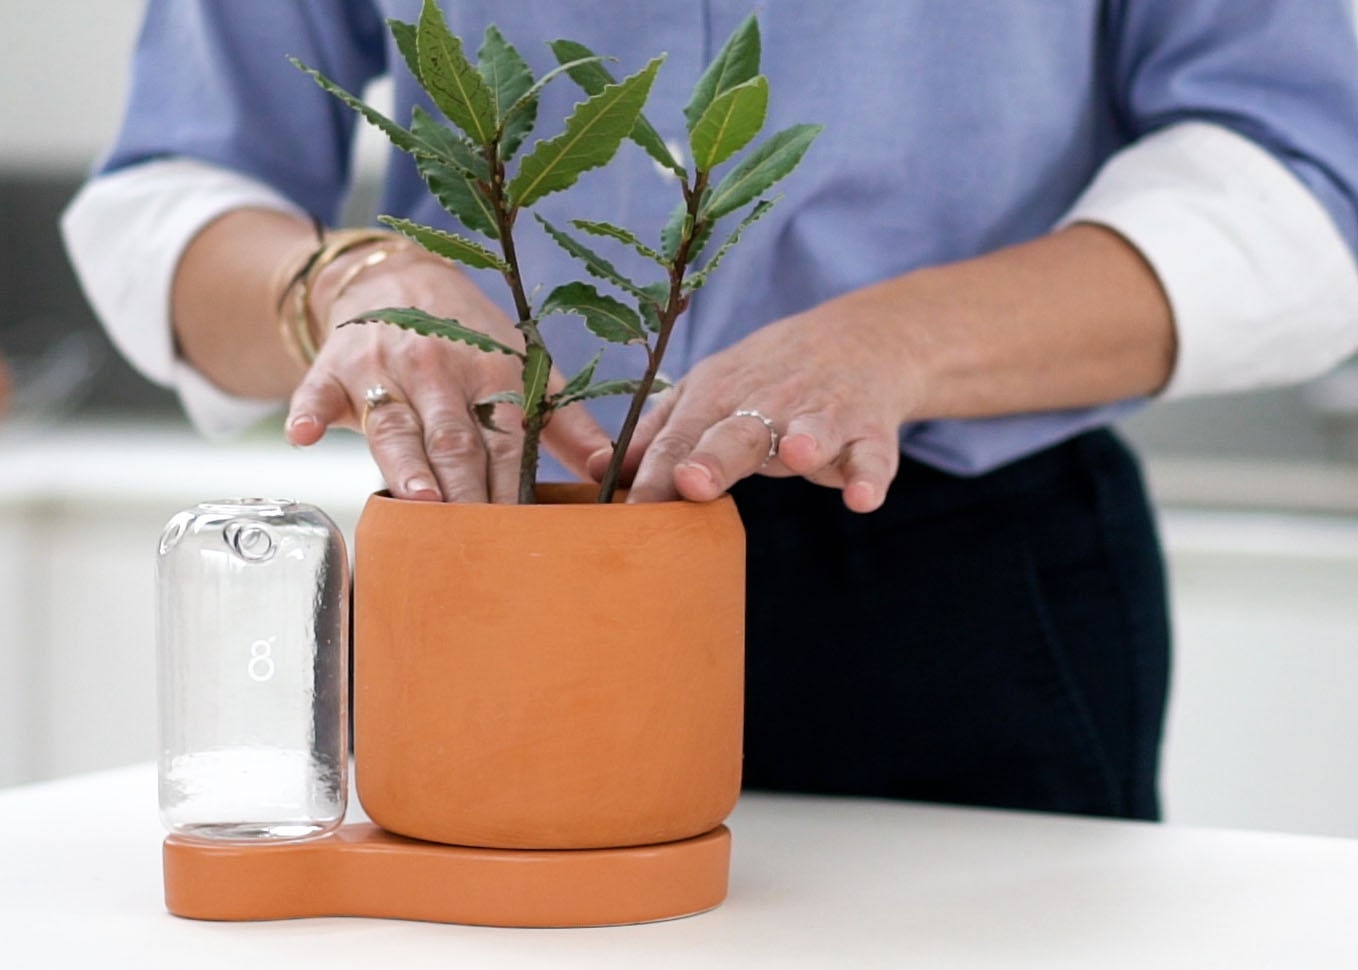 Greenfinity - Kit de bouturage - Toutes vos plantes à l'infini